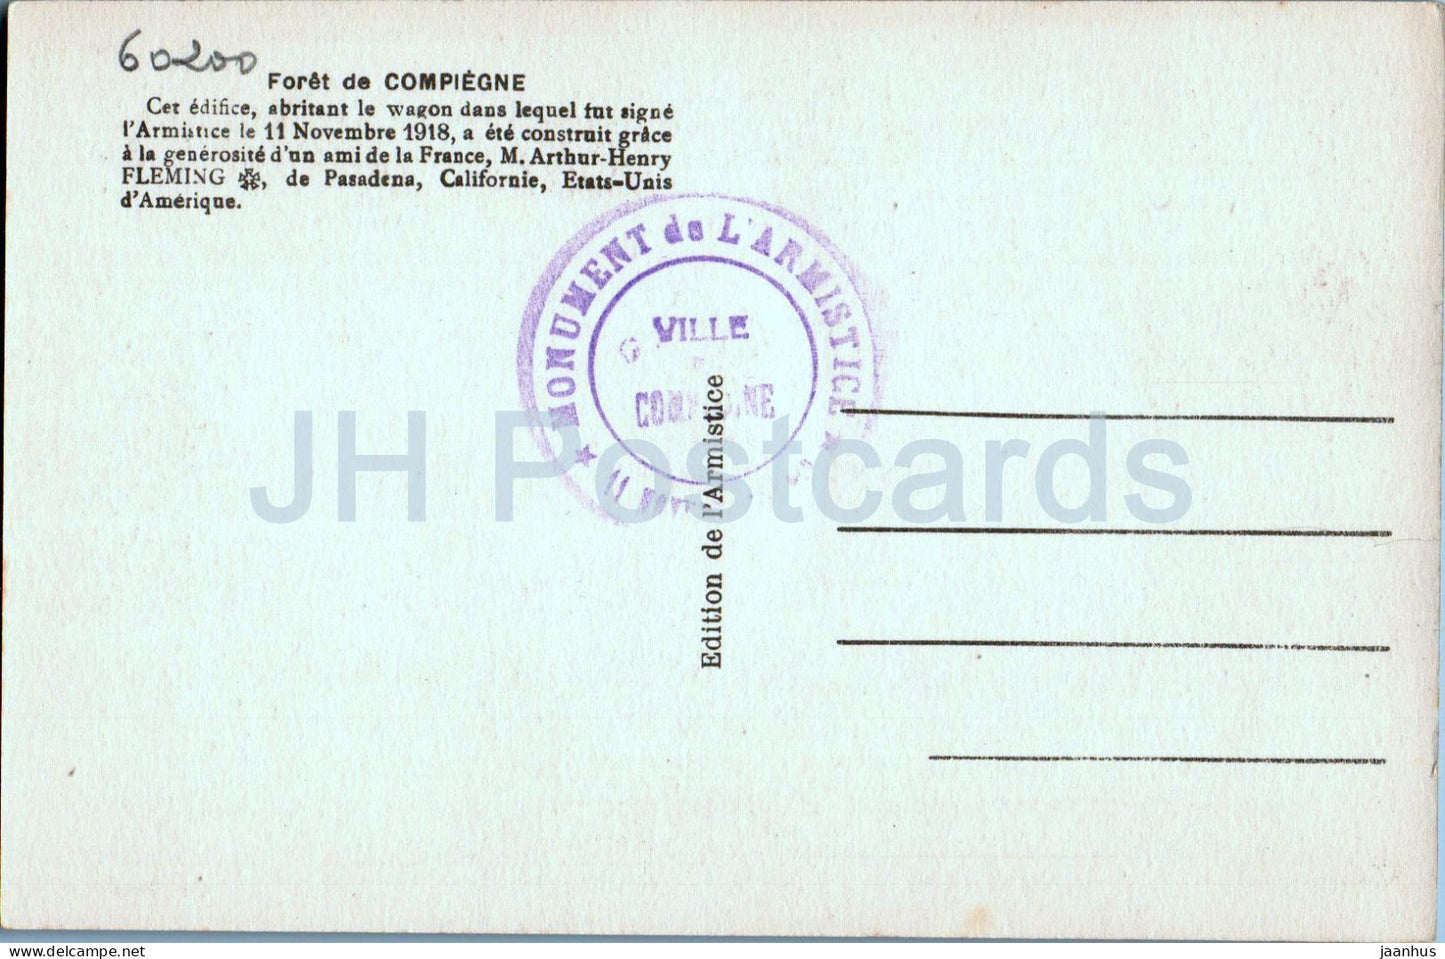 Foret de Compiegne - Edifice avec le Wagon de L' Armistice - alte Postkarte - Frankreich - unbenutzt 